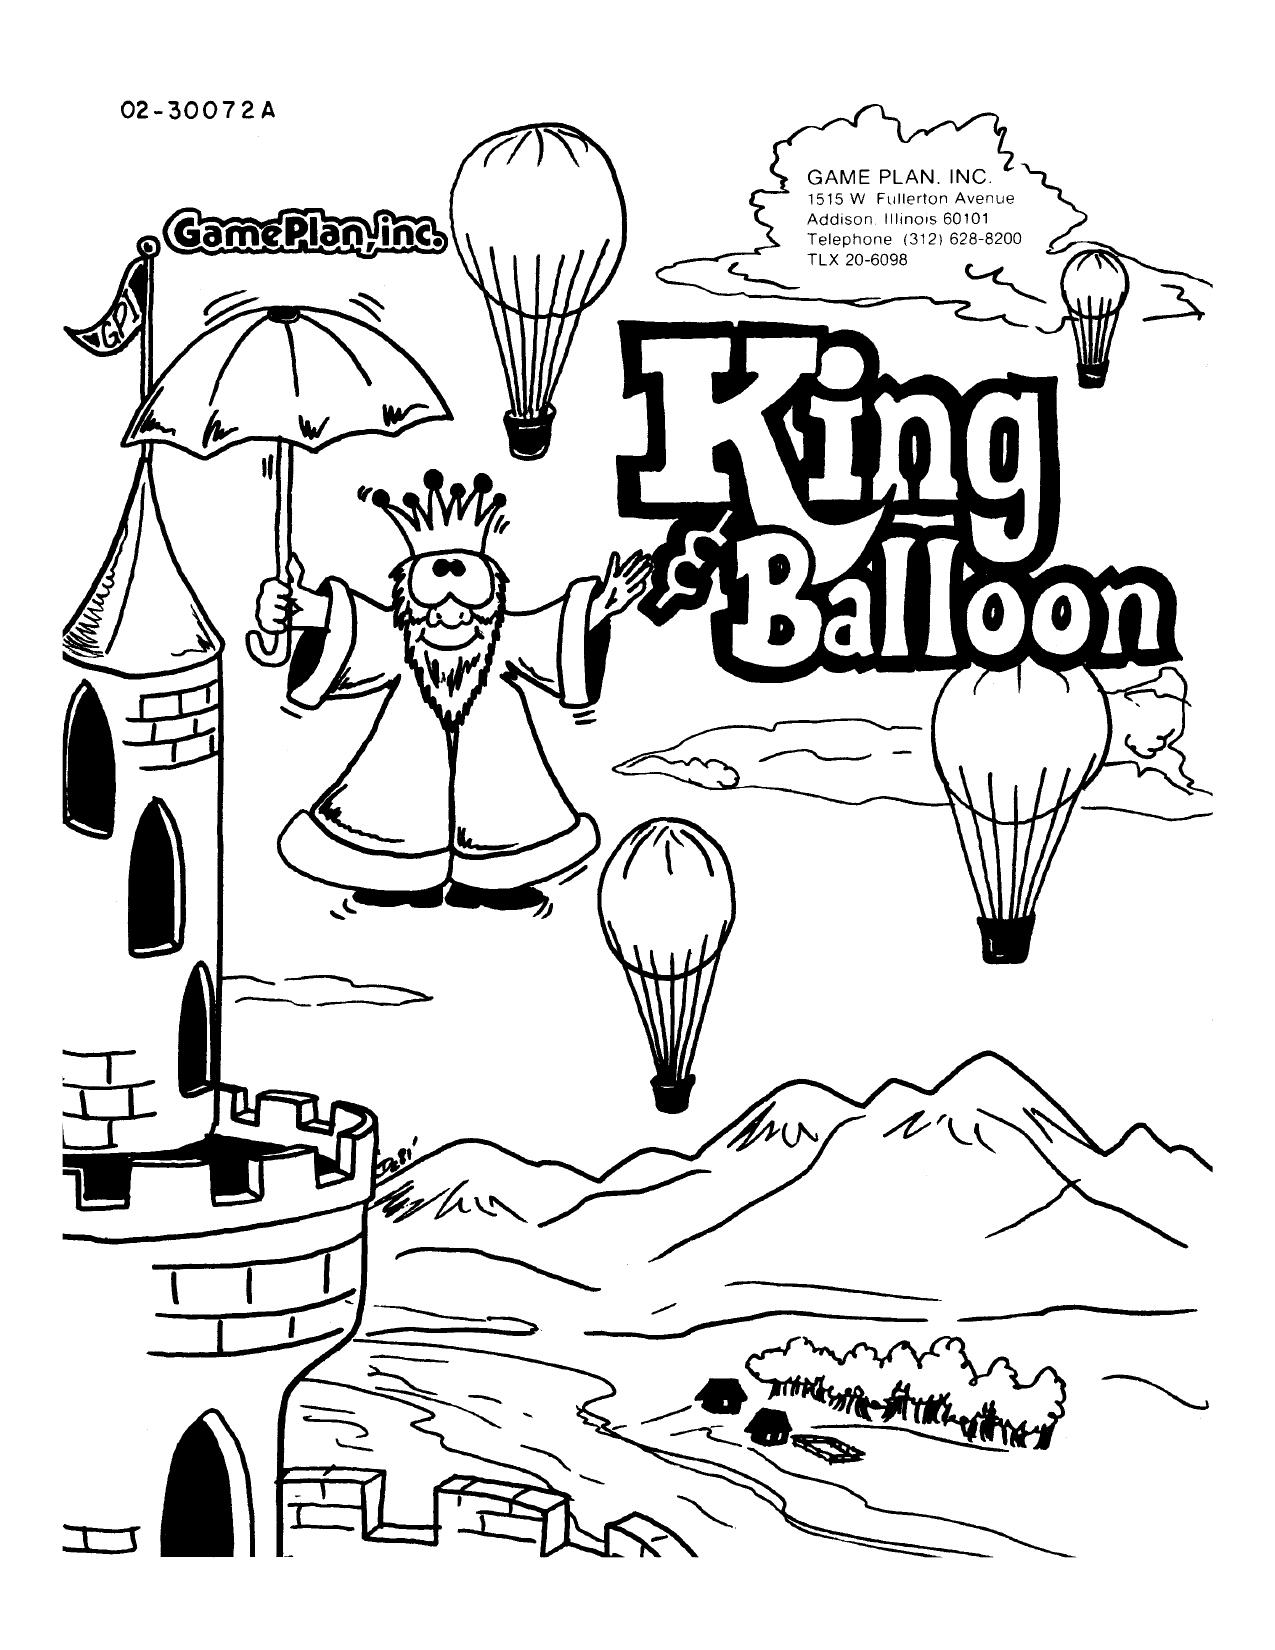 King&Balloon Manual